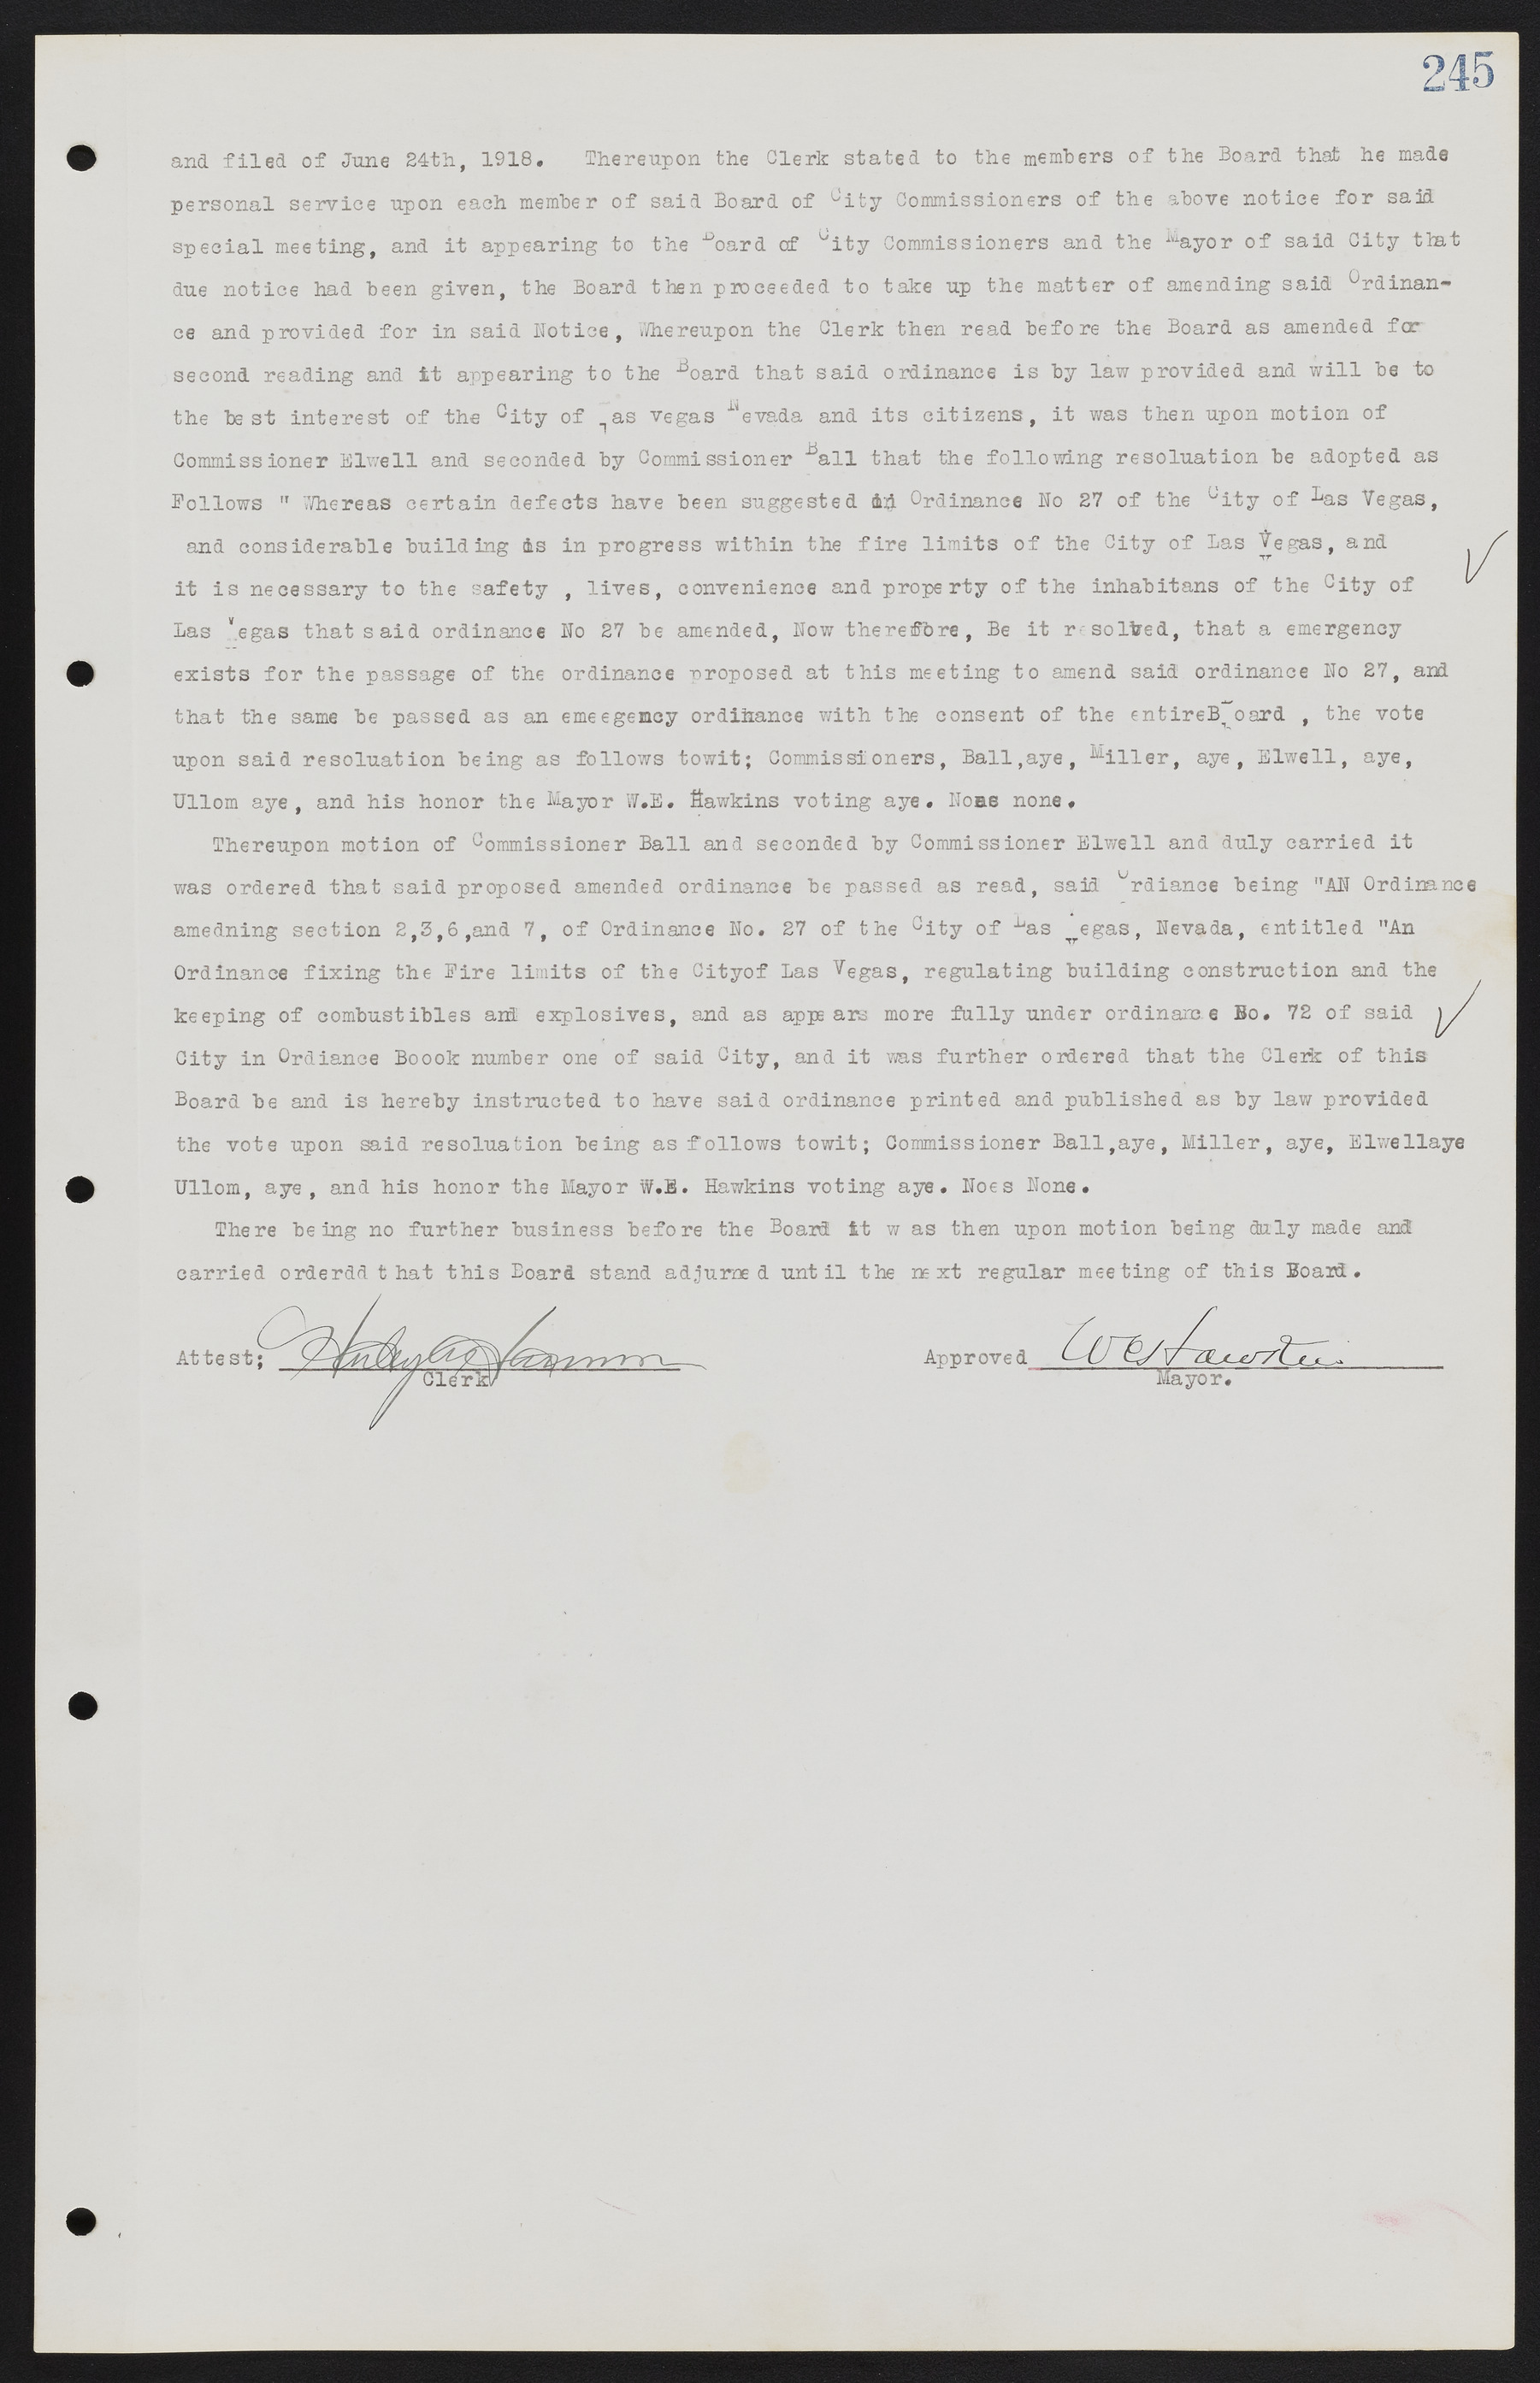 Las Vegas City Commission Minutes, June 22, 1911 to February 7, 1922, lvc000001-261